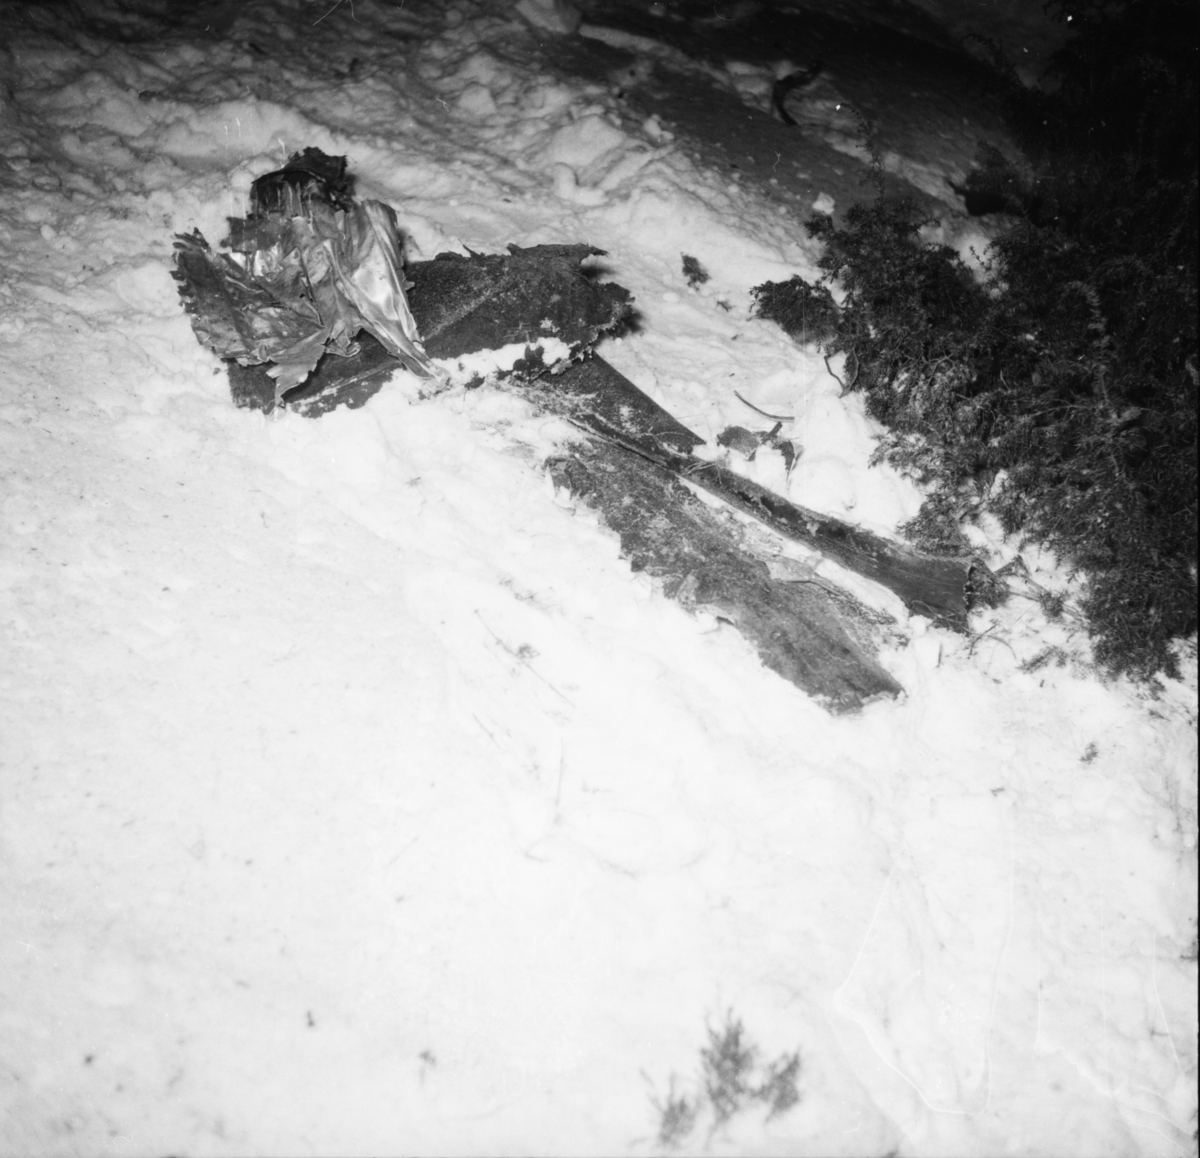 Vardens arkiv. "Fly-ulykke på Siktesøya v/Brevik. Jetfly eksploderte"  12.02.1954